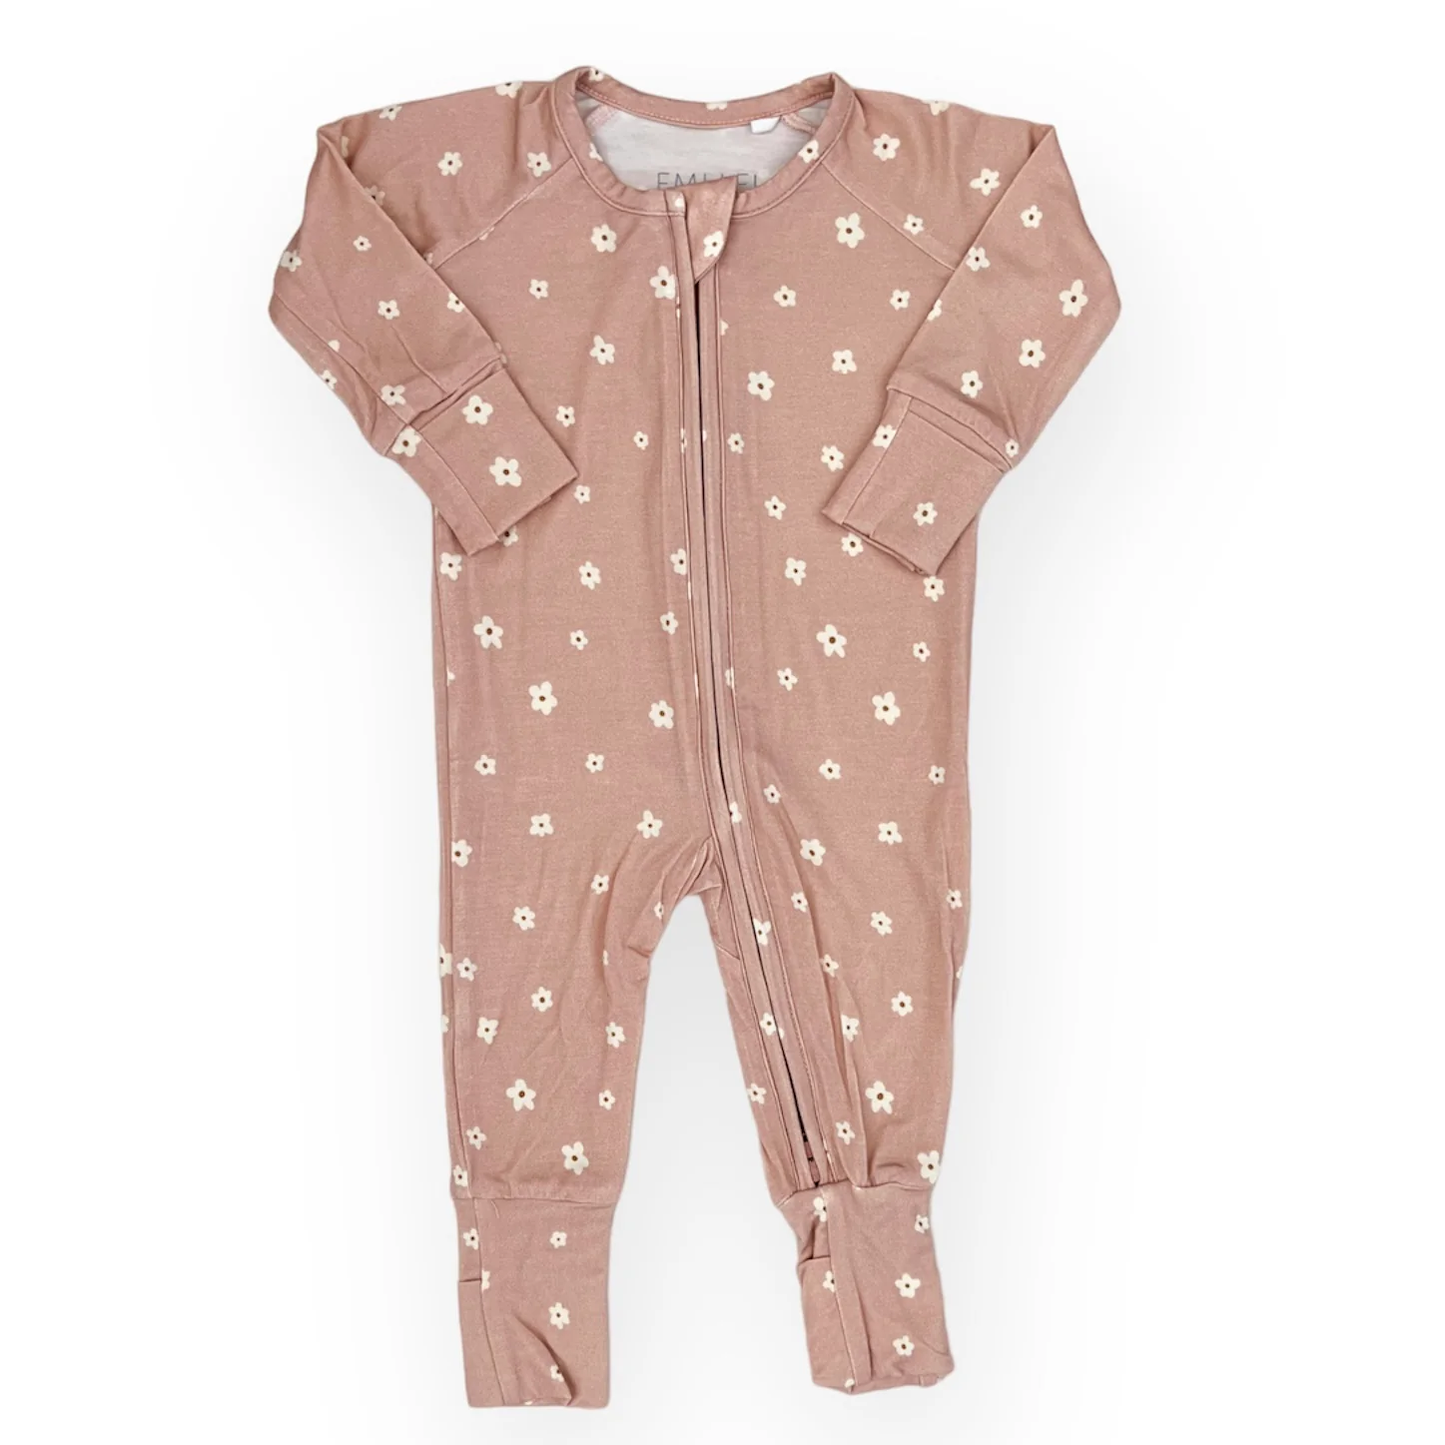 Bamboo Convertible Baby Footie Romper Pajama - Dainty Mauve